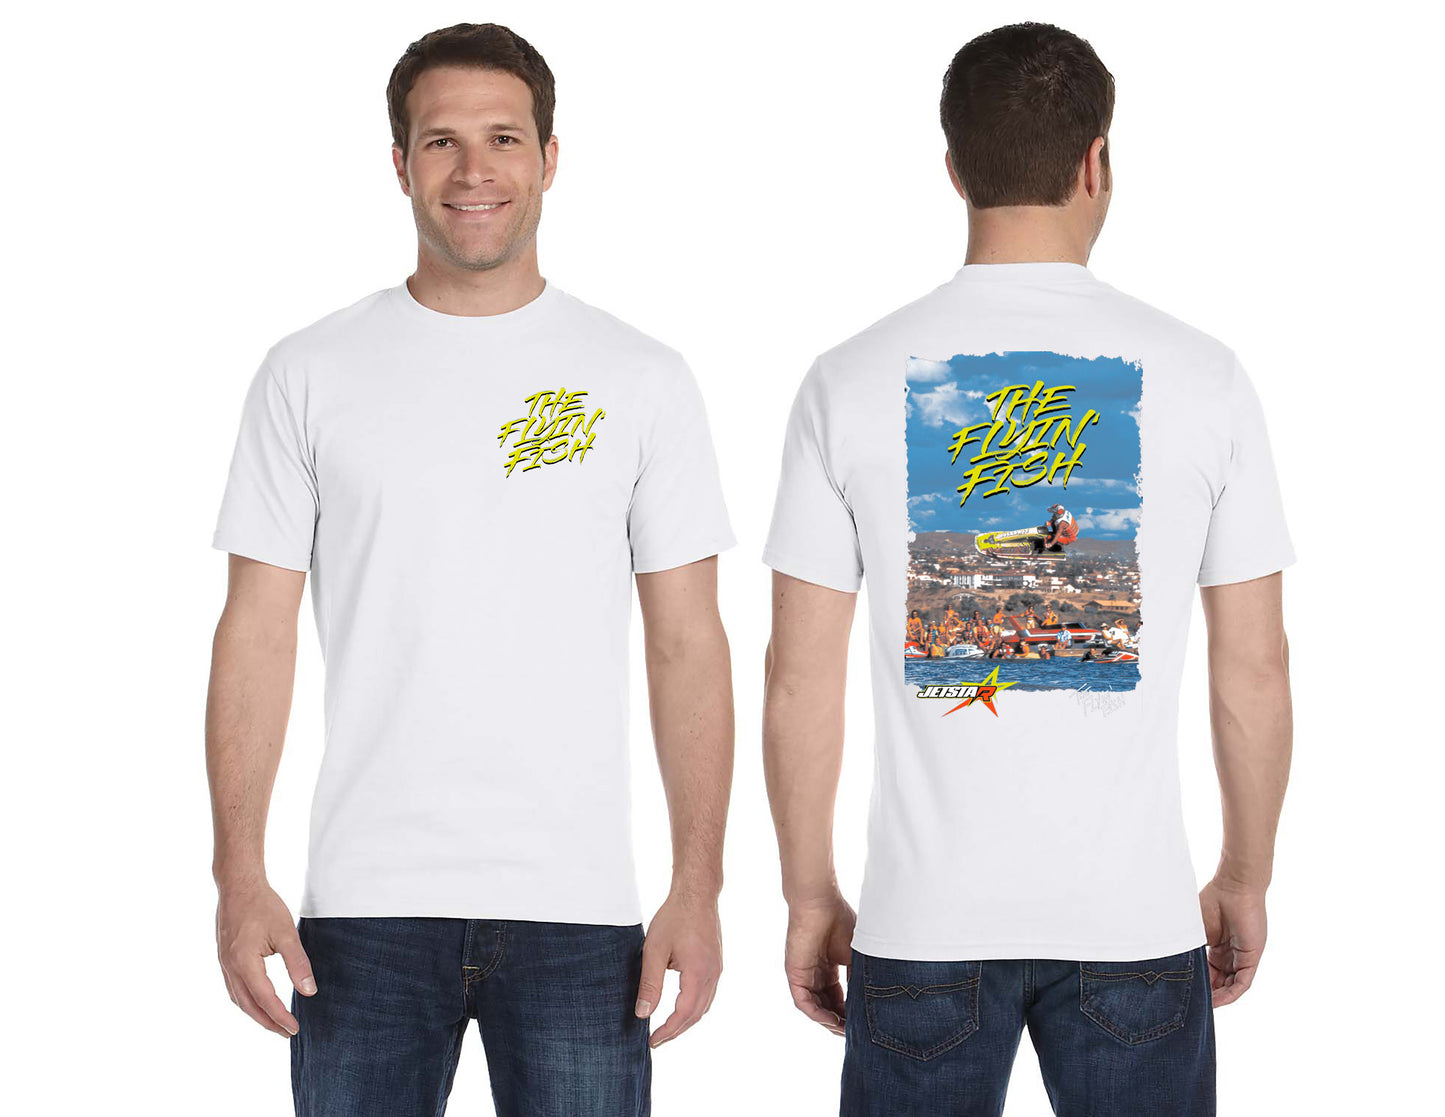 Chris " THE FLYIN FISH " Fischetti Signature Series Tee Shirts & Tank Tops